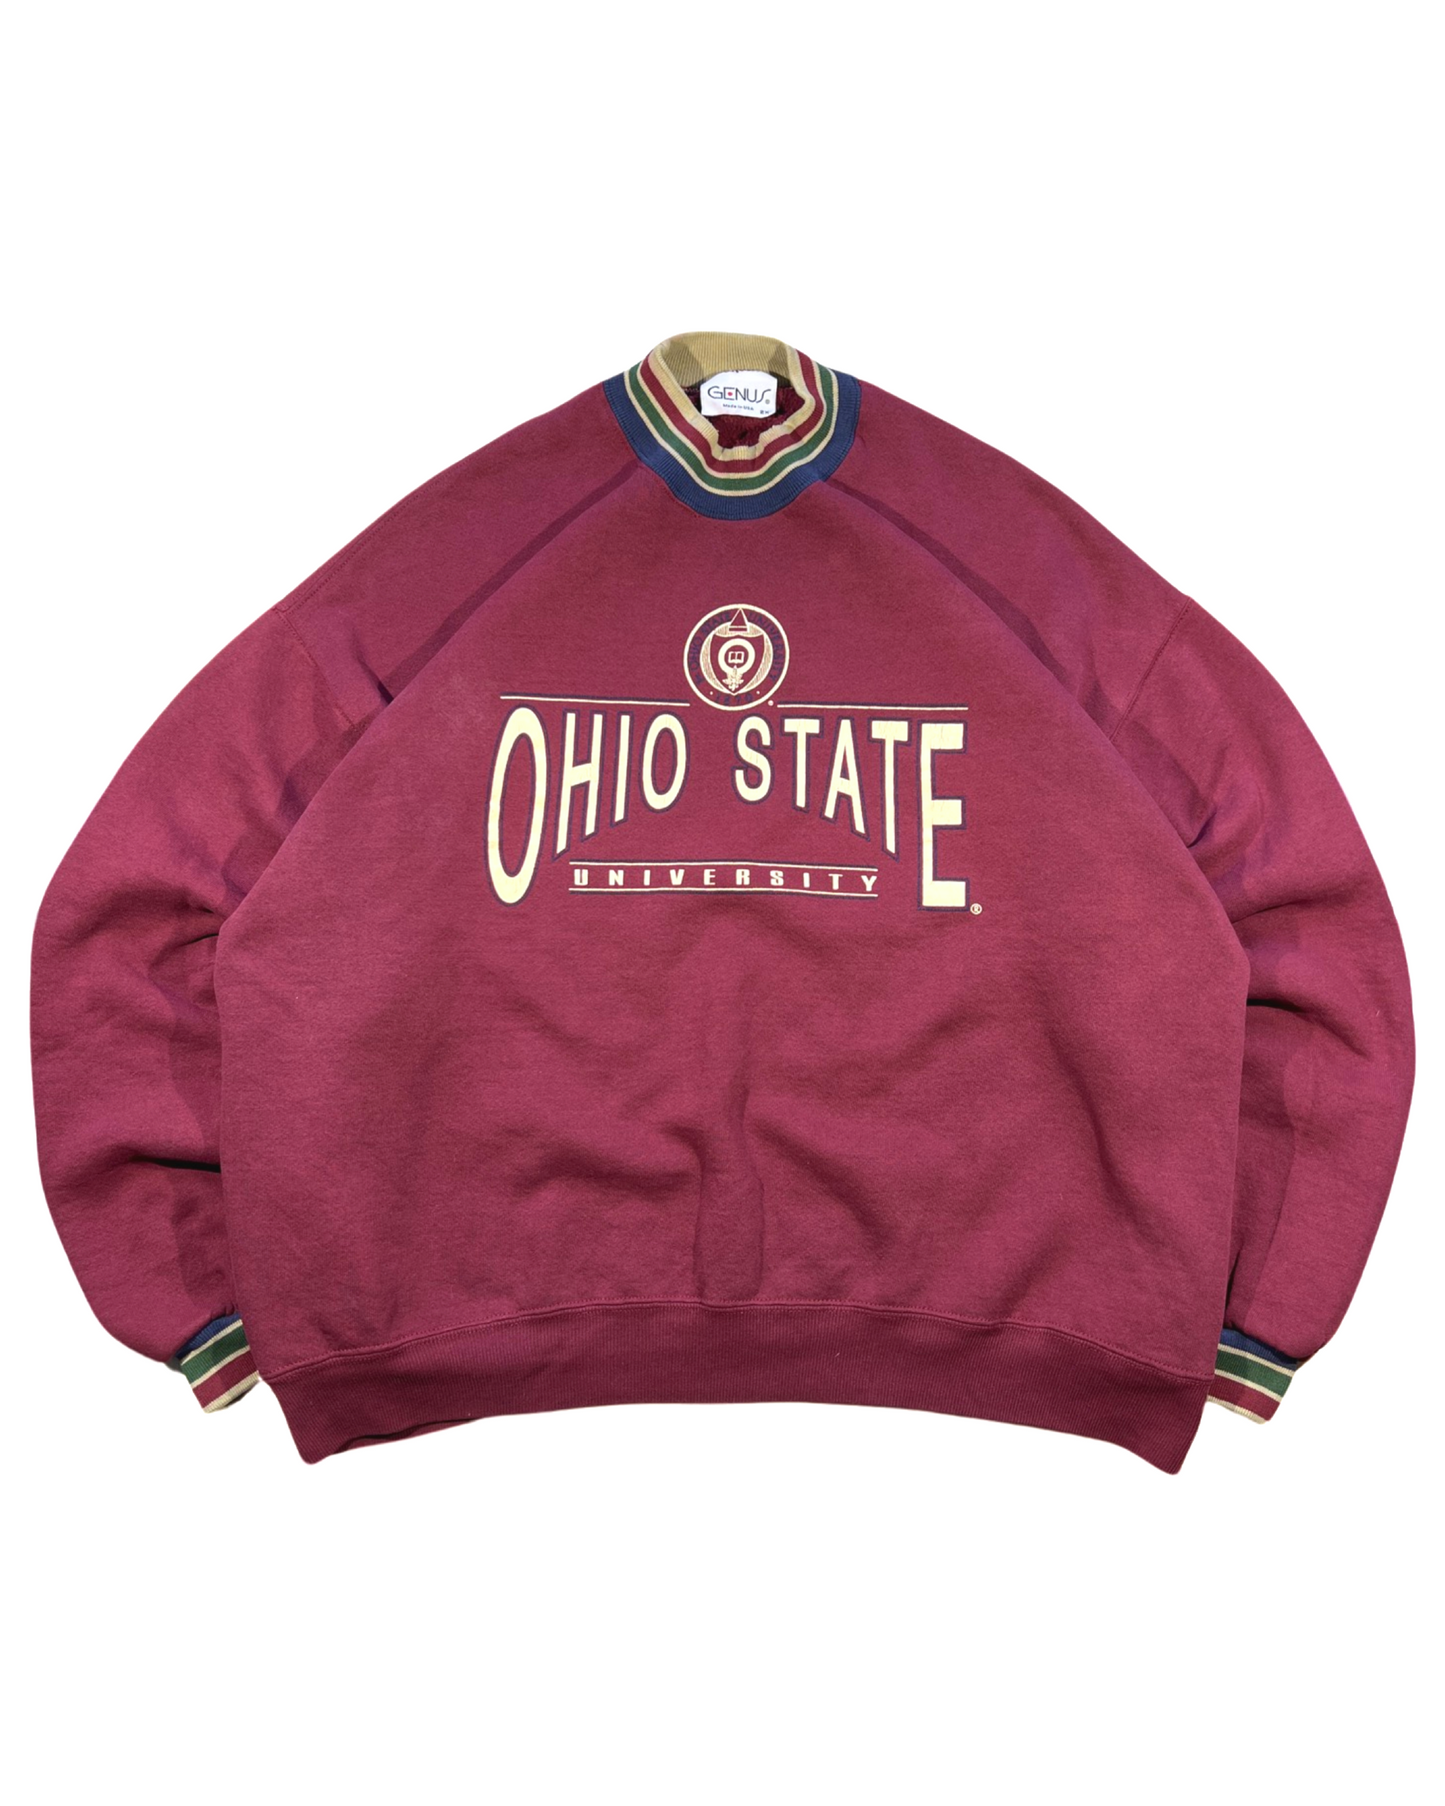 Vintage Ohio State Crewneck - XL